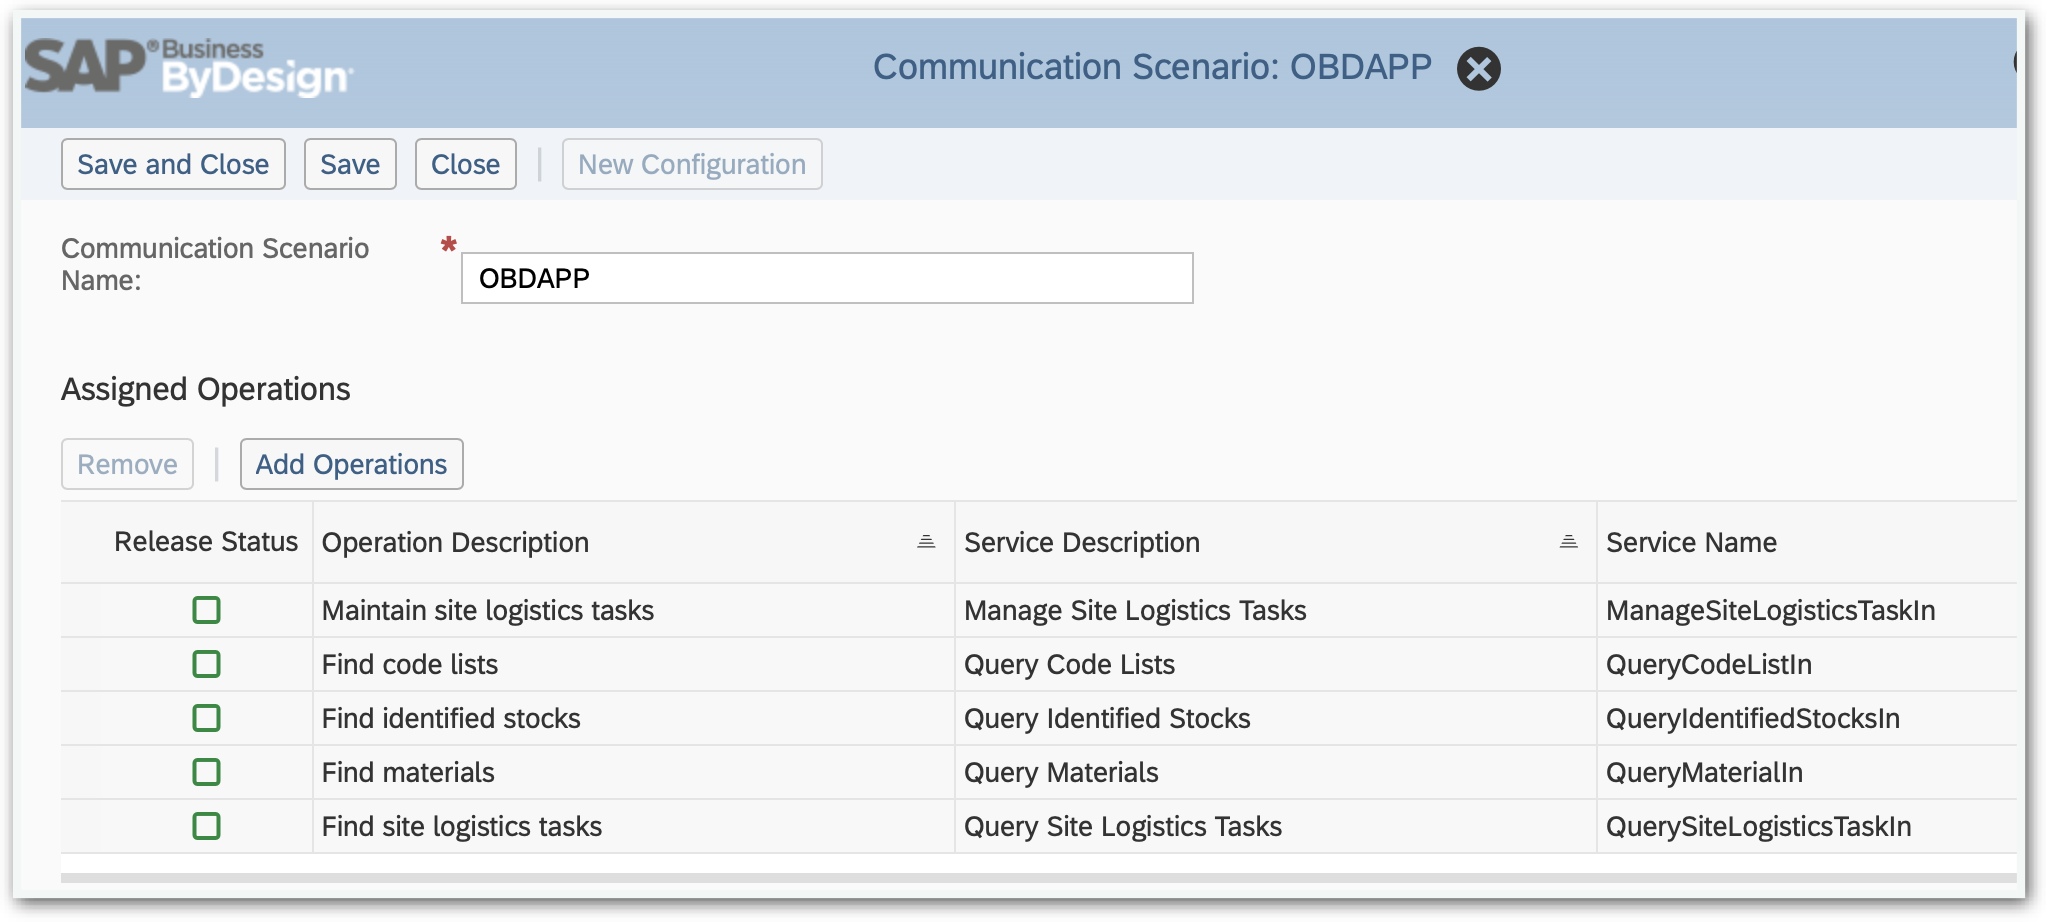 SAP Business ByDesign Communication Scenario